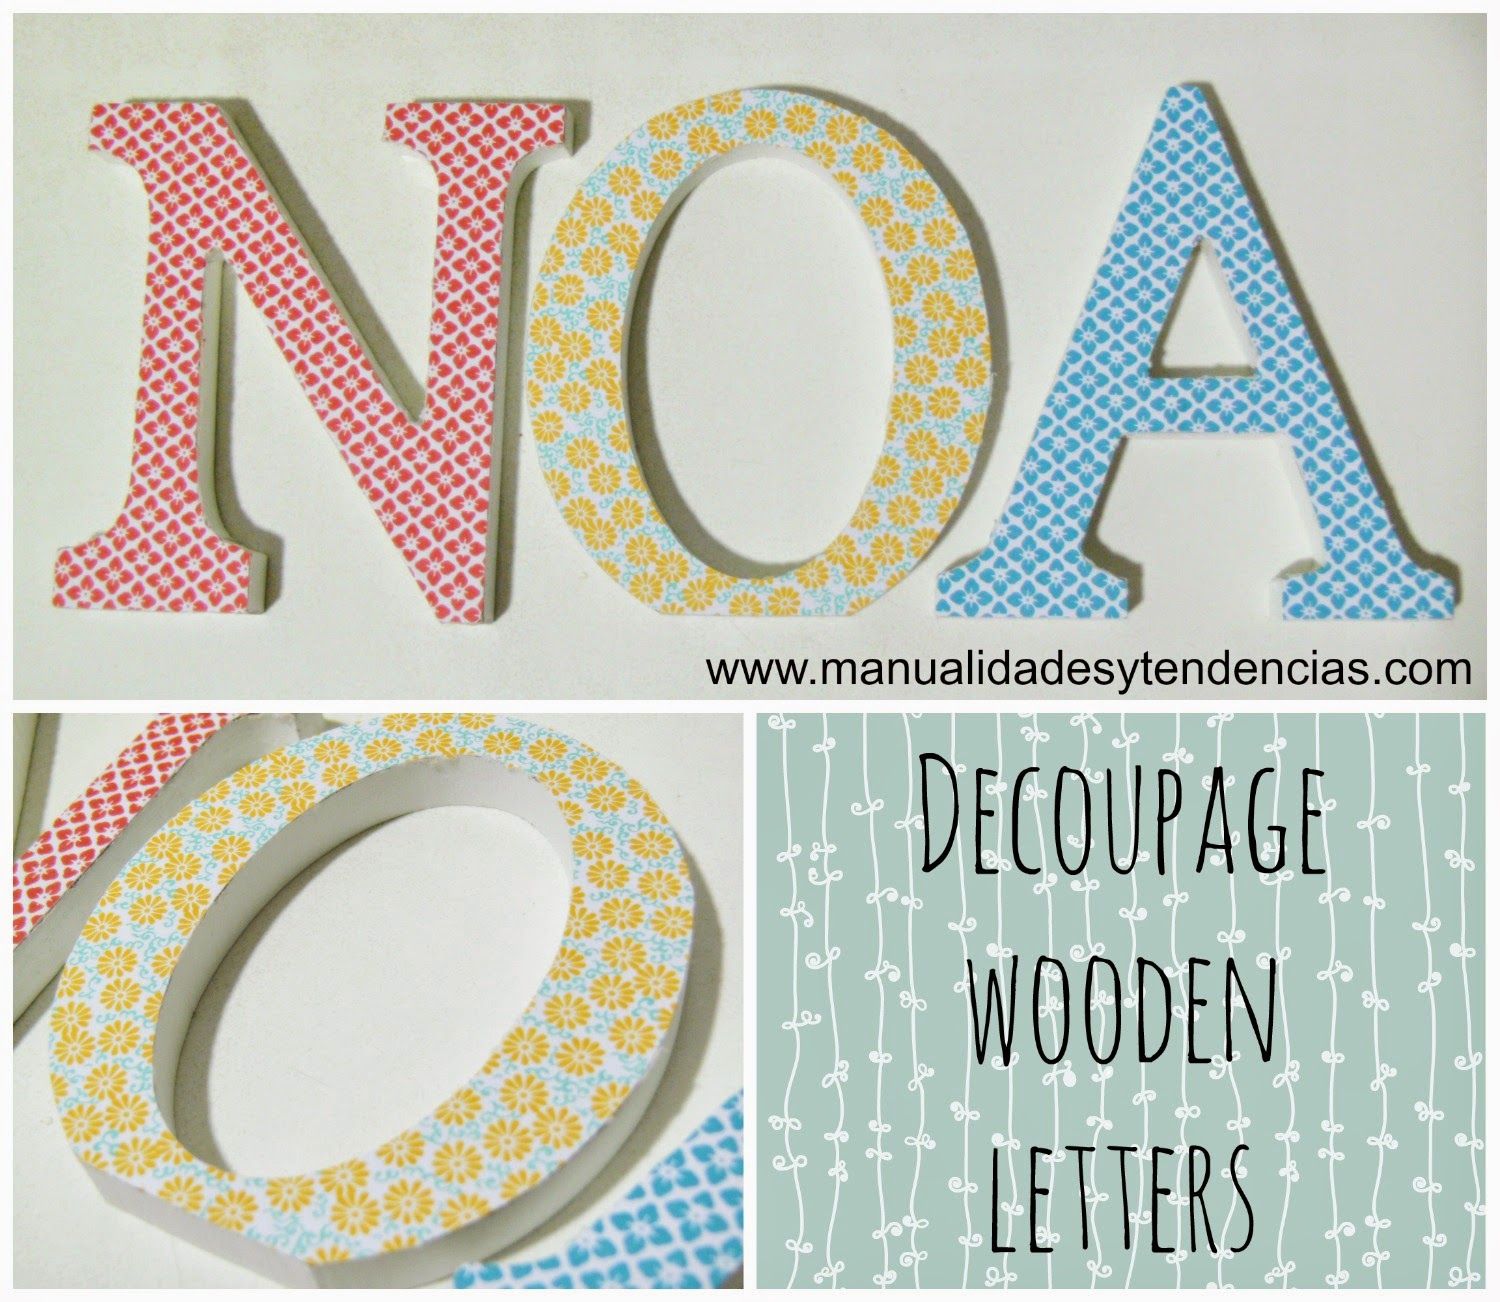 decoupage wooden letters tutorial